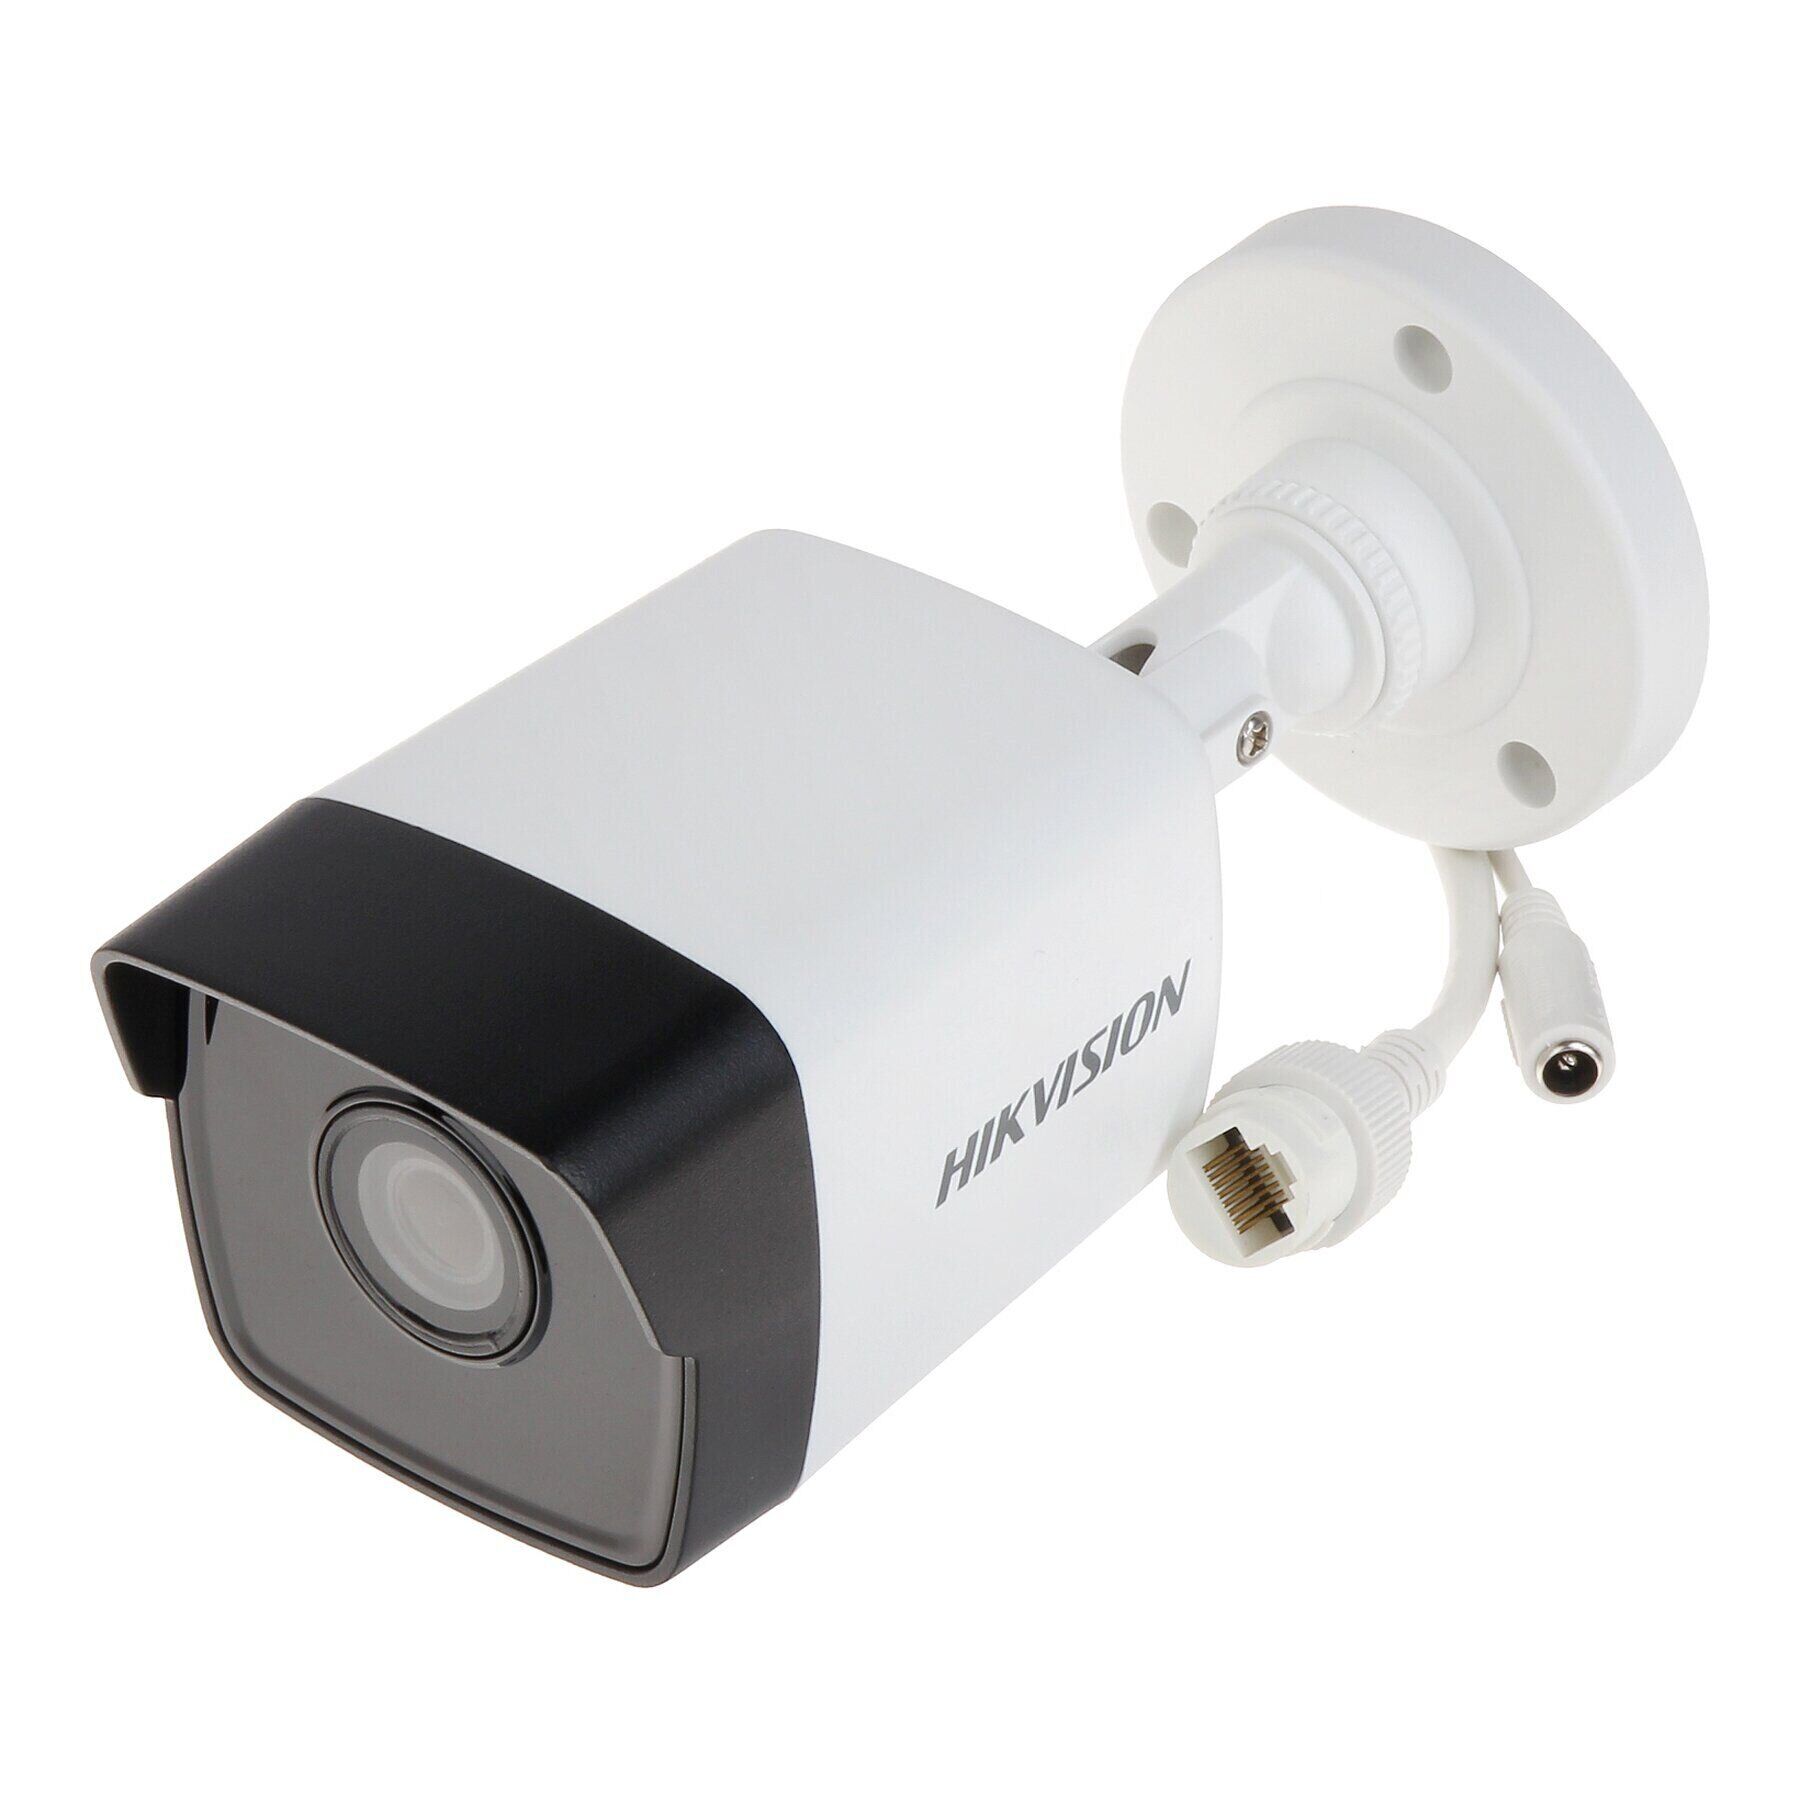 Камера видеонаблюдения 3 мп. Hikvision DS-2cd1021-i. DS-2cd1023g0-IU. Hikvision DS-2cd1053g0-i. Hikvision IP Camera DS-2cd1023g0-i.